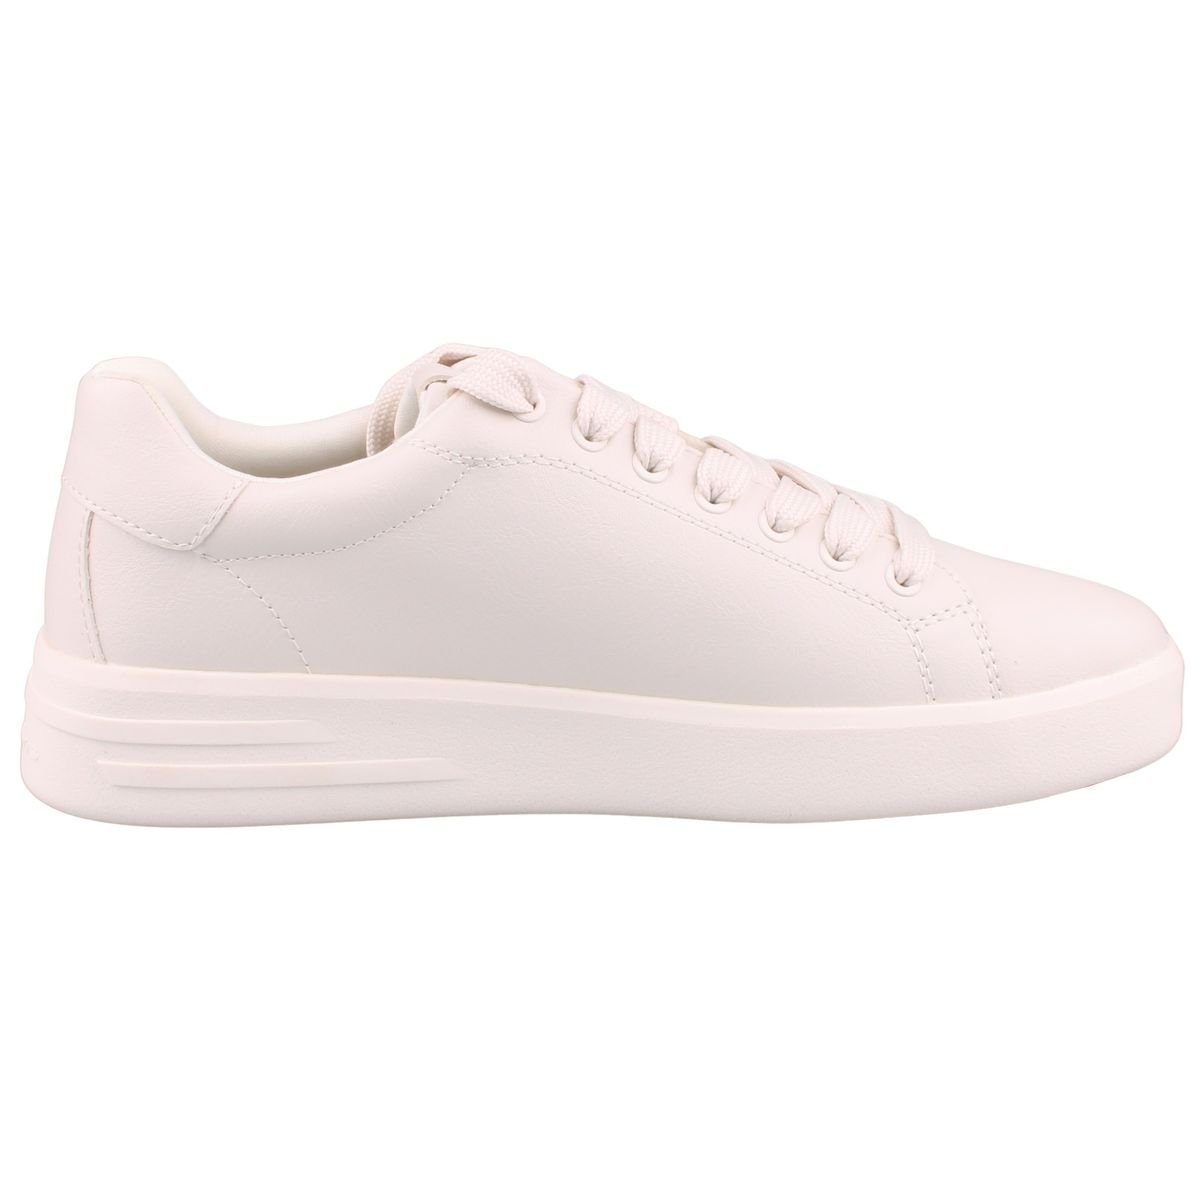 Tamaris 1-23750-20/146 Sneaker Weiß UNI) (WHITE